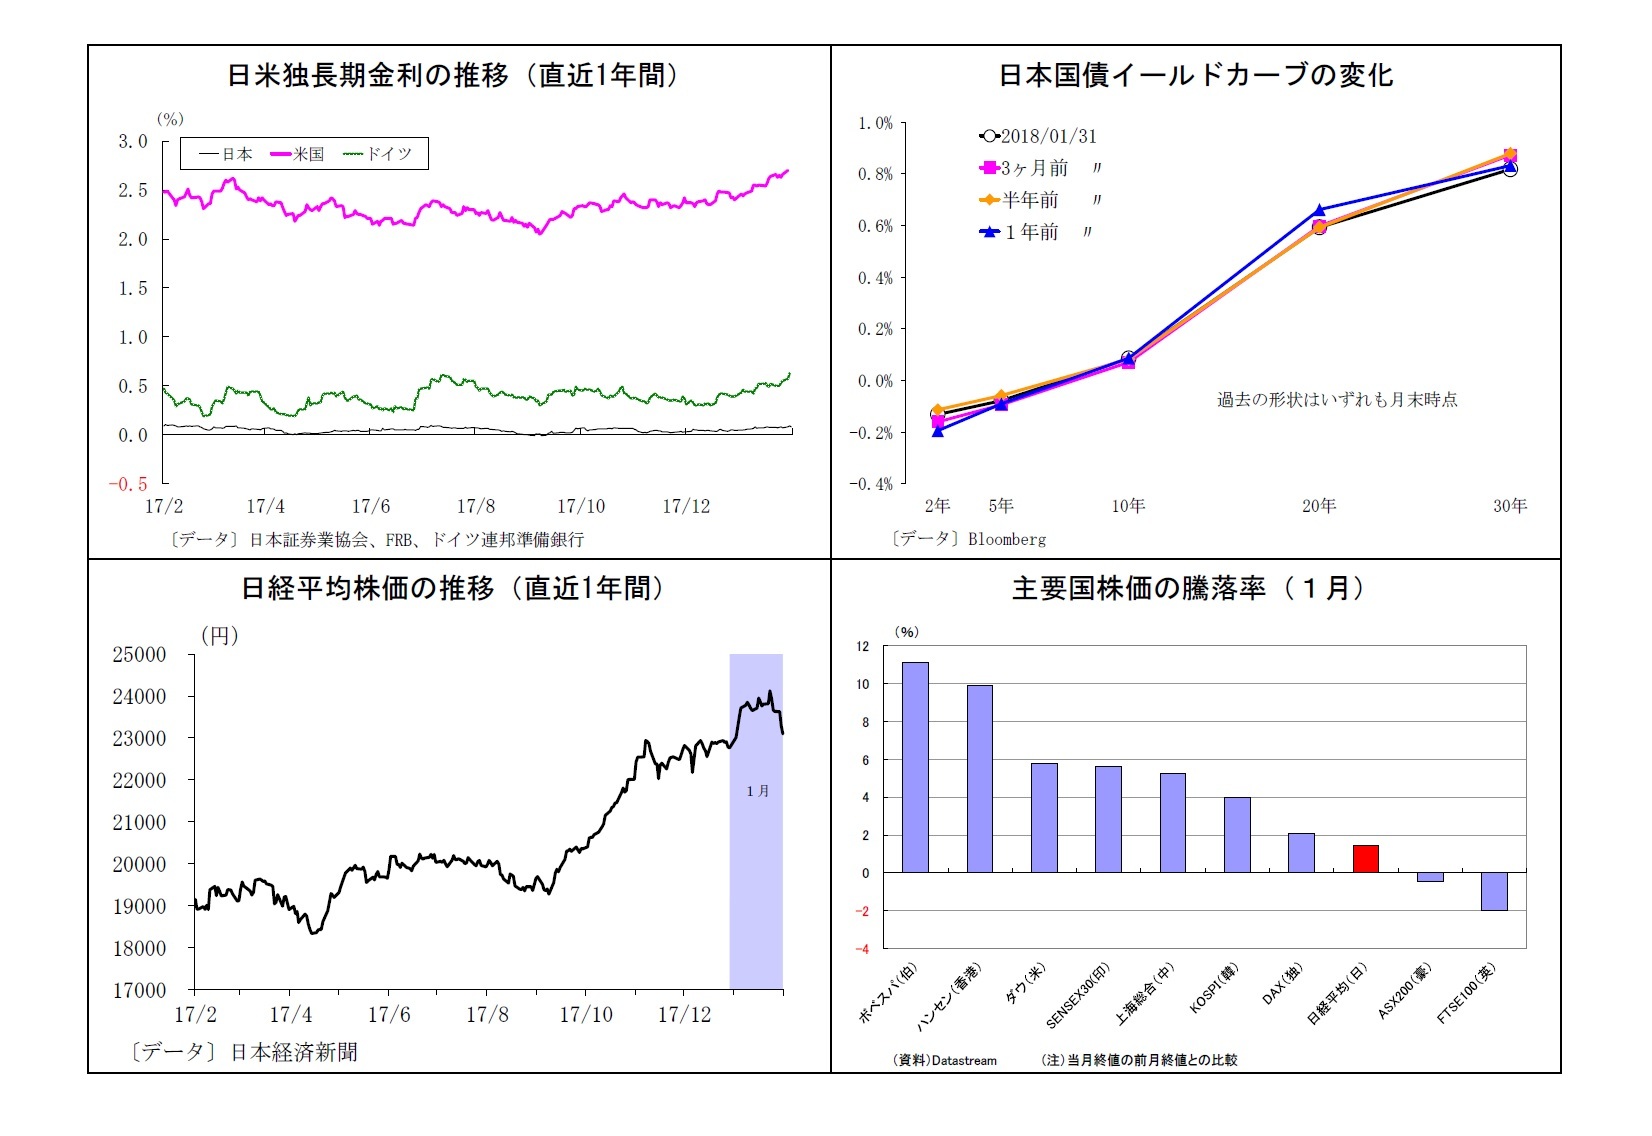 日米独長期金利の推移（直近1年間）/日本国債イールドカーブの変化/日経平均株価の推移（直近1年間）/主要国株価の騰落率（１月）